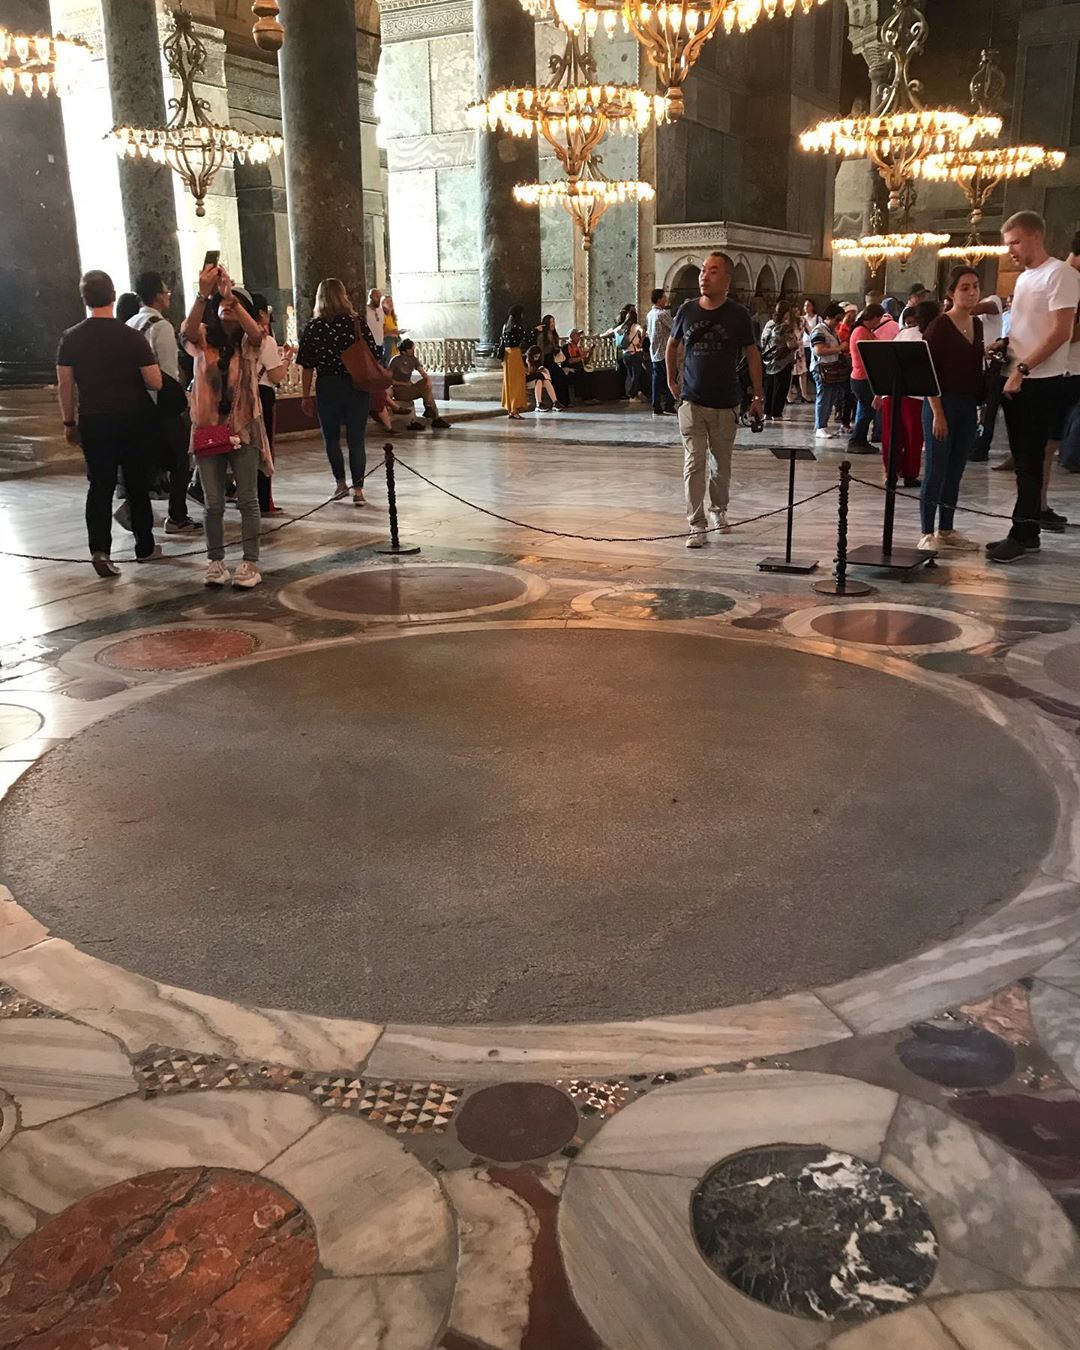 Hagia Sophia Museum 2020 Entrance Fee